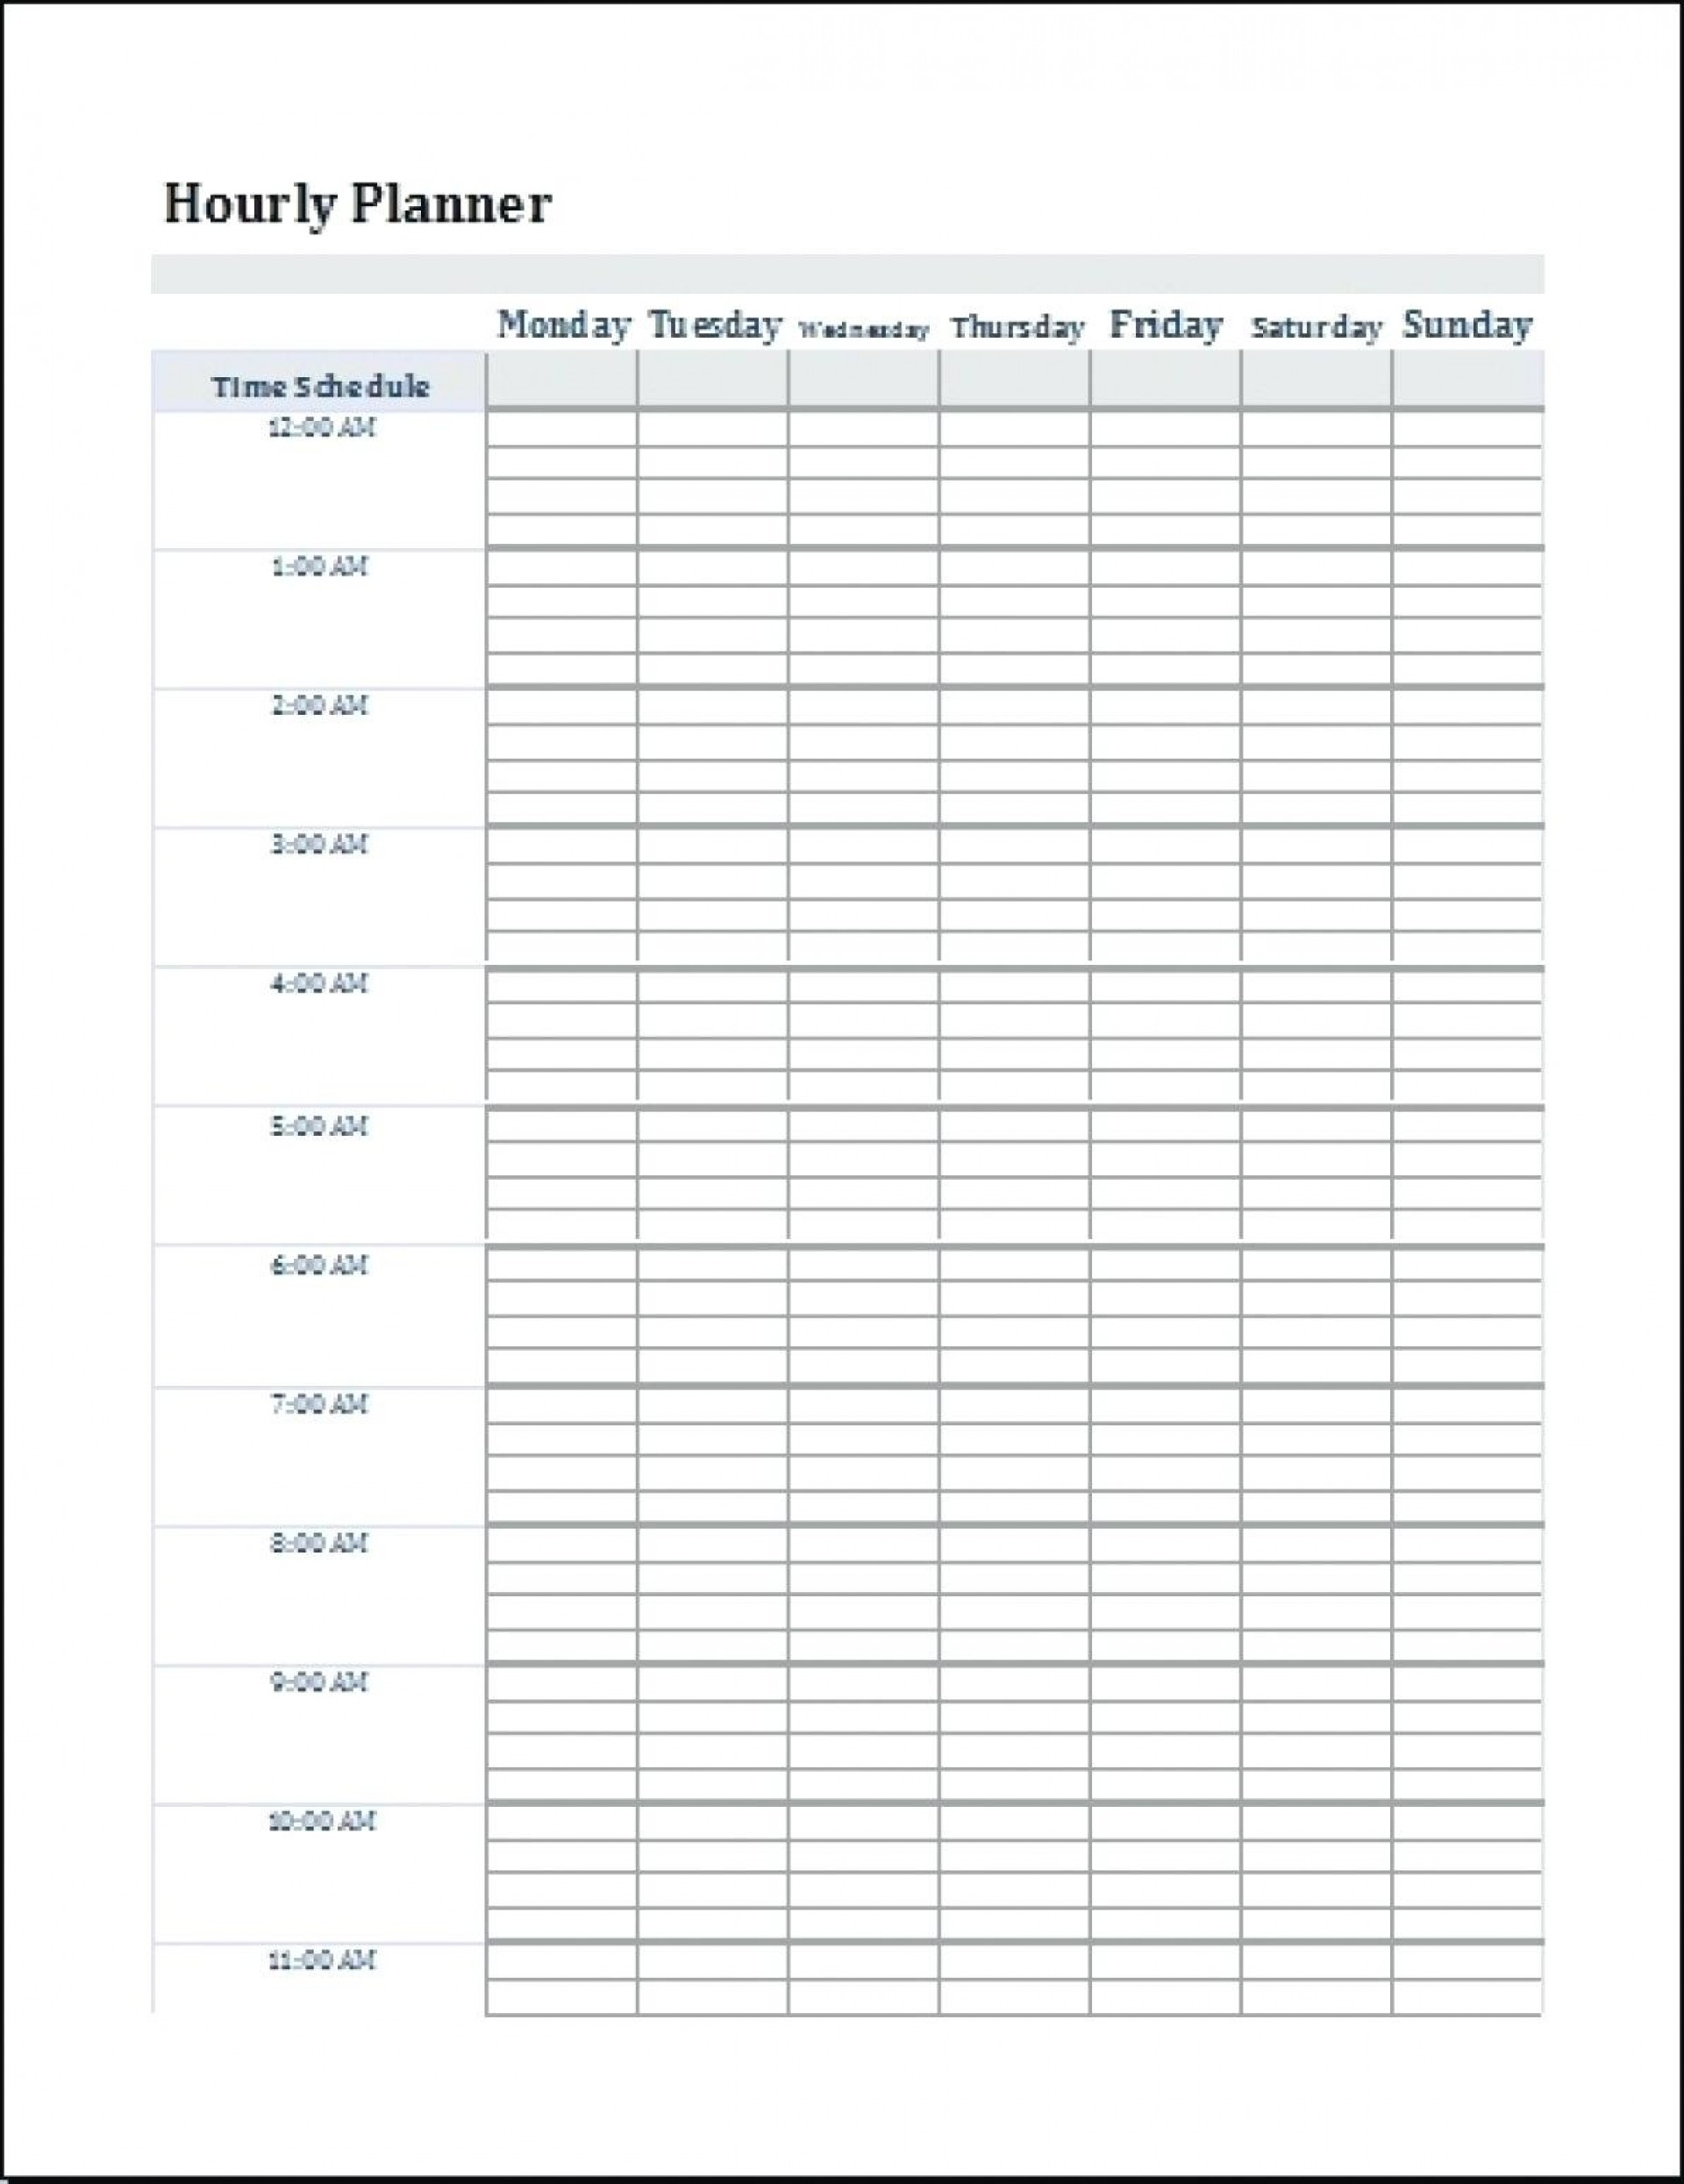 010 Template Ideas Weekly Hourly Schedule Calendar Excel intended for Weekly Hourly Calendar Template